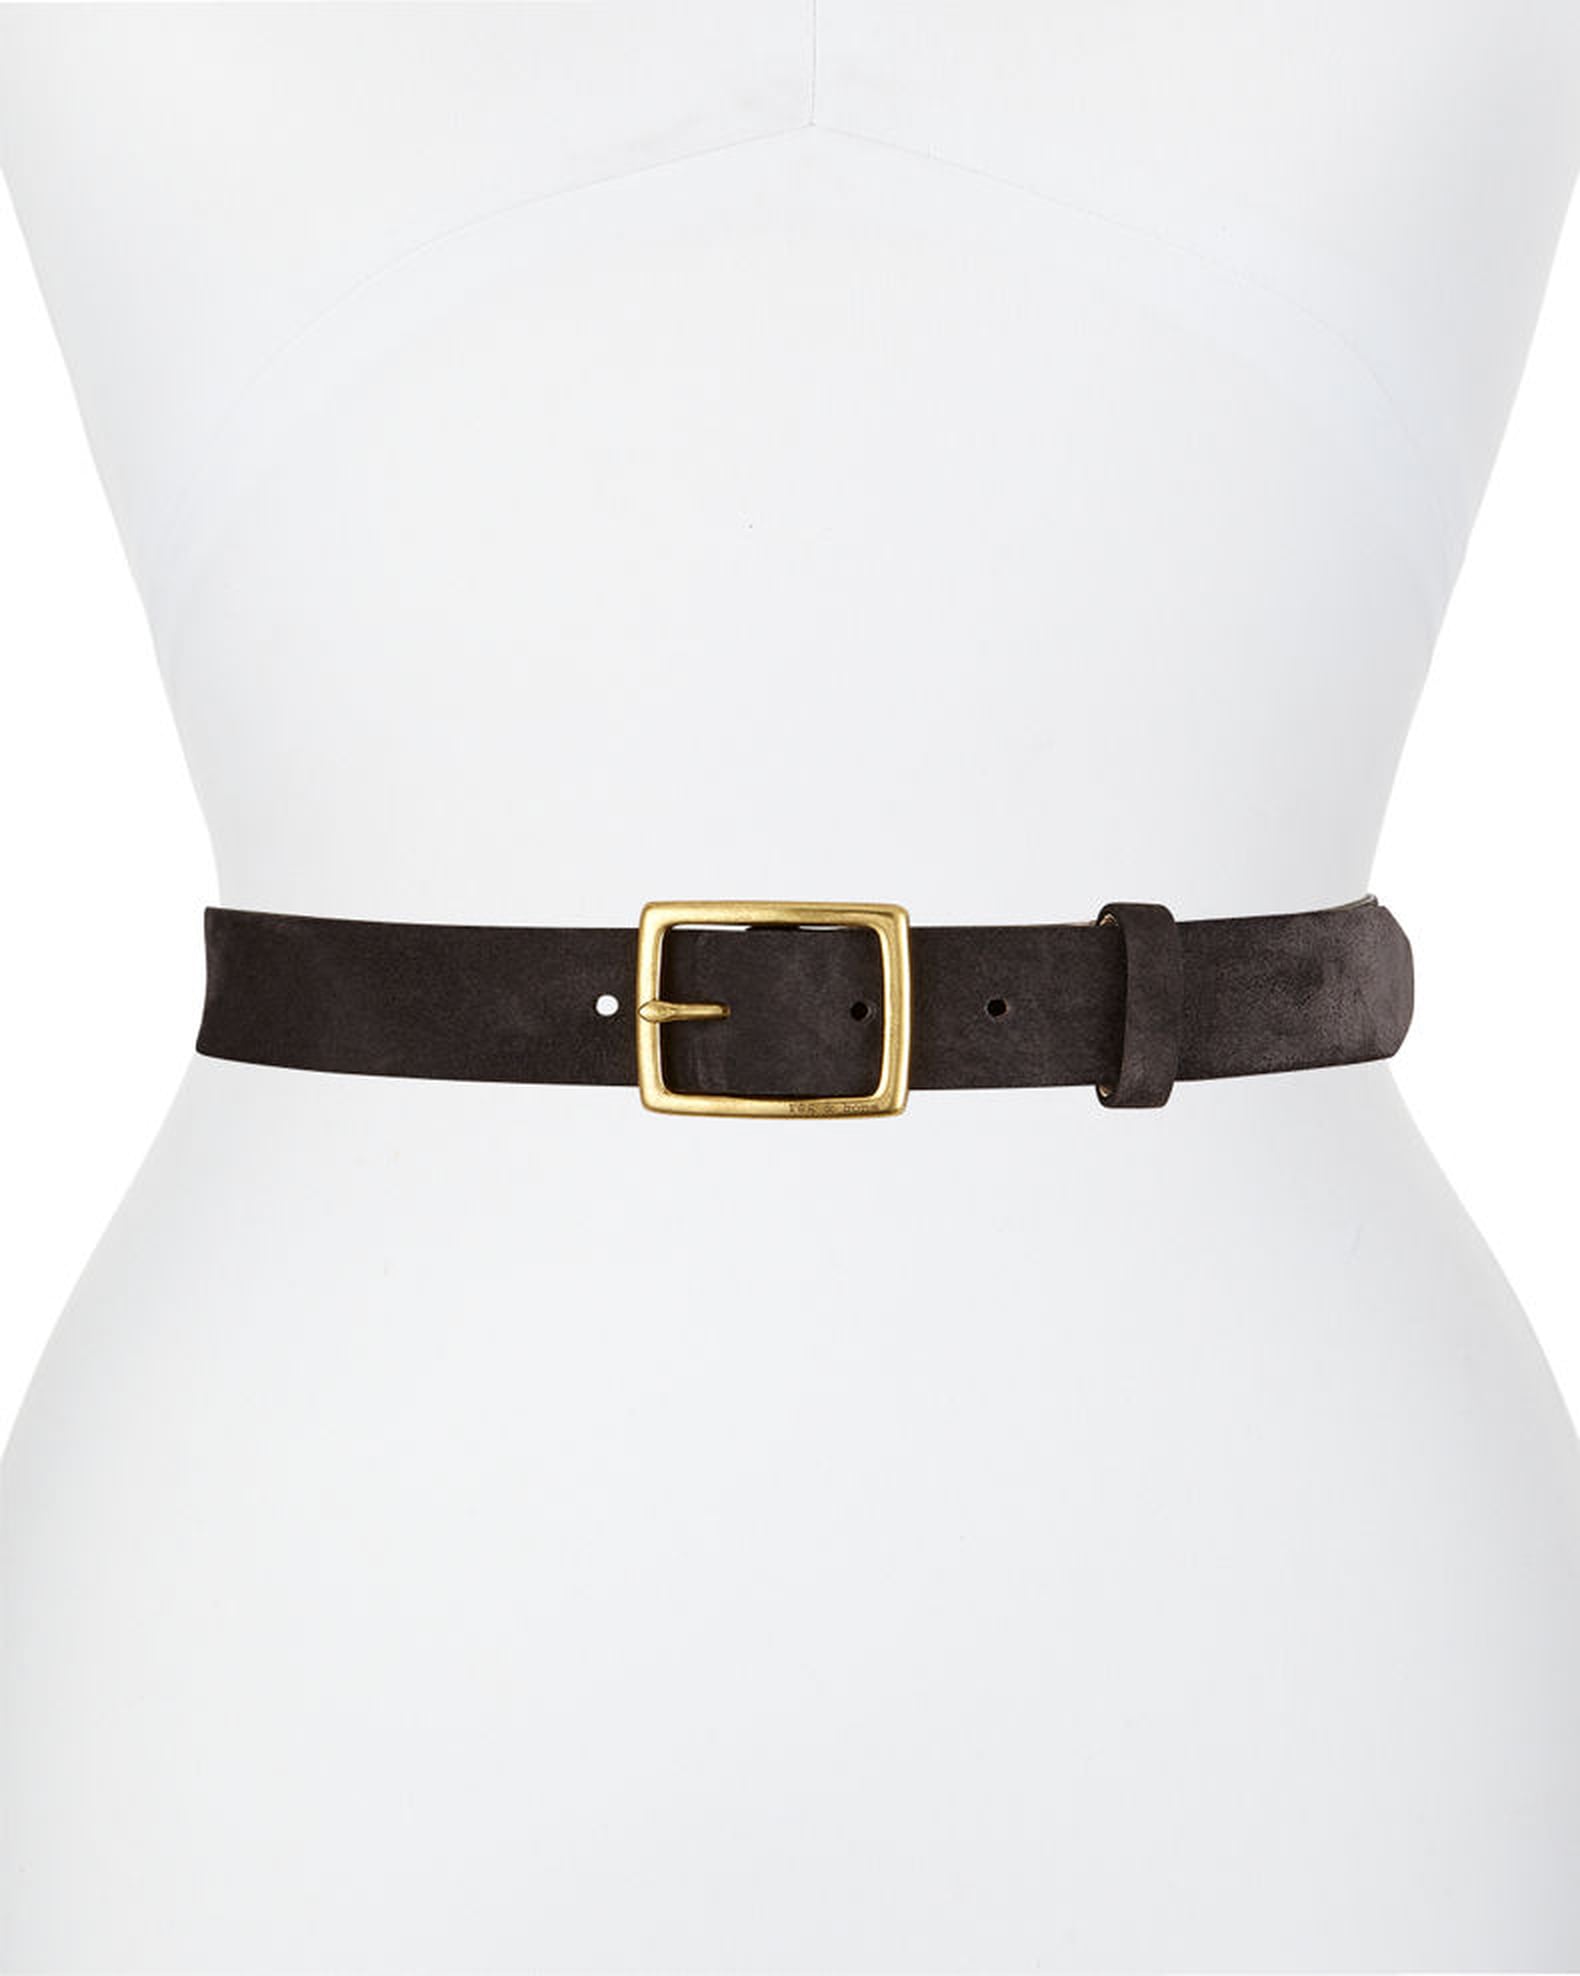 How to Wear a Belt | Outfit Ideas | POPSUGAR Fashion